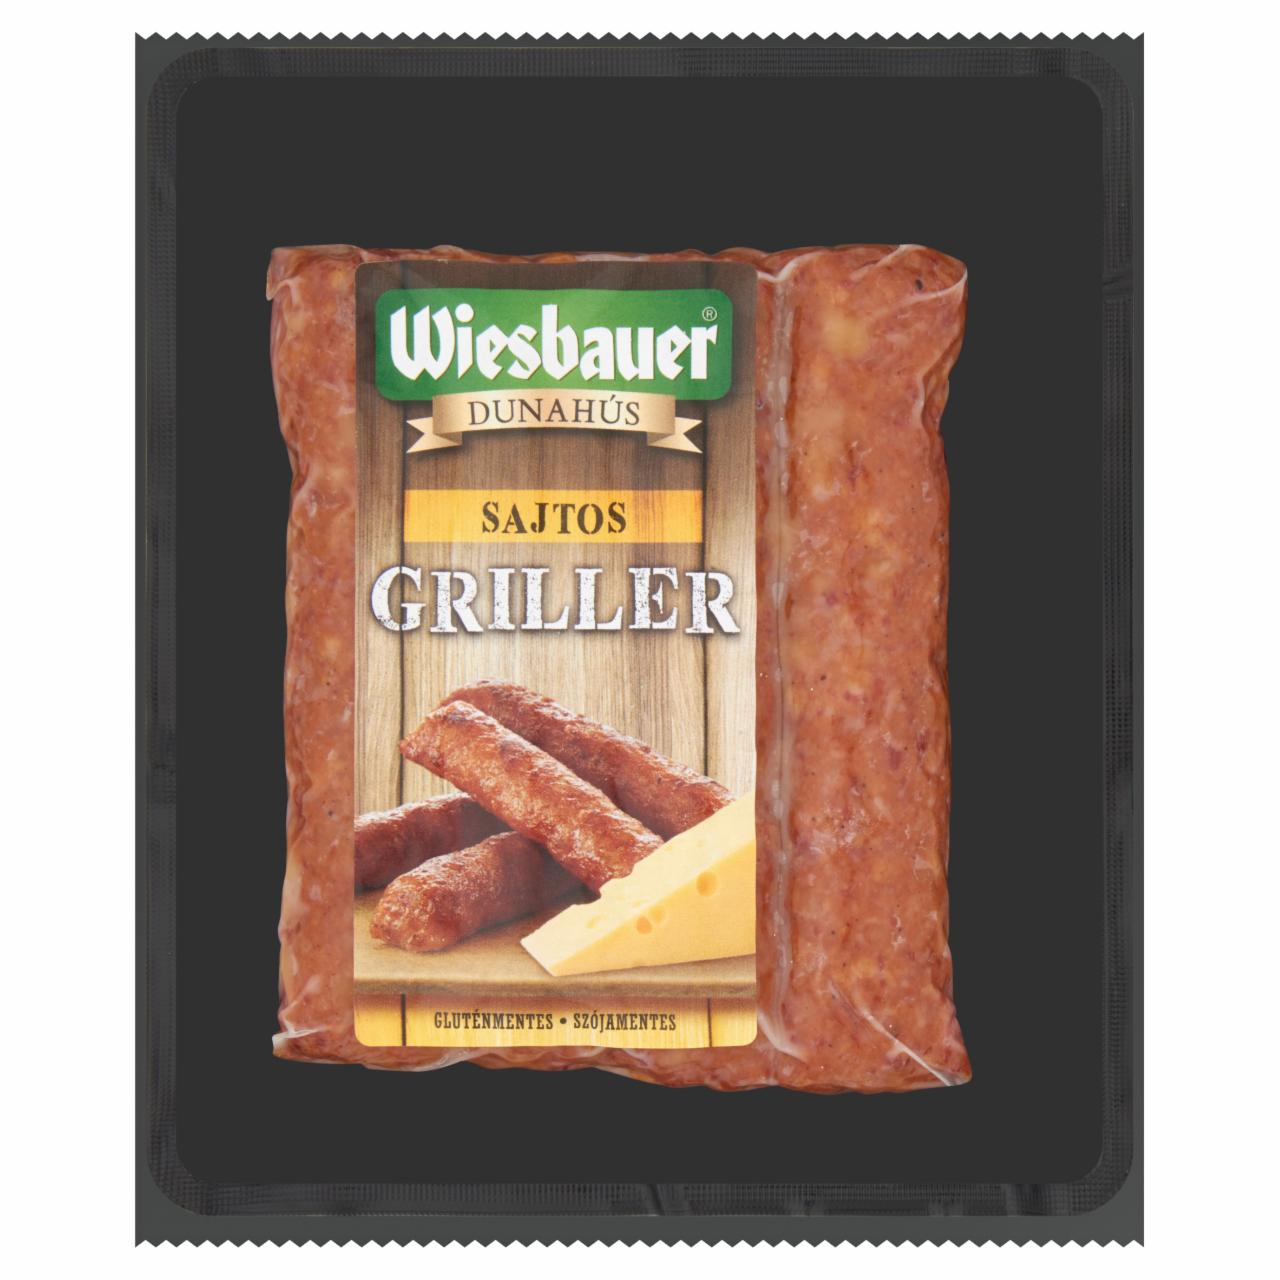 Képek - Wiesbauer sajtos griller 200 g